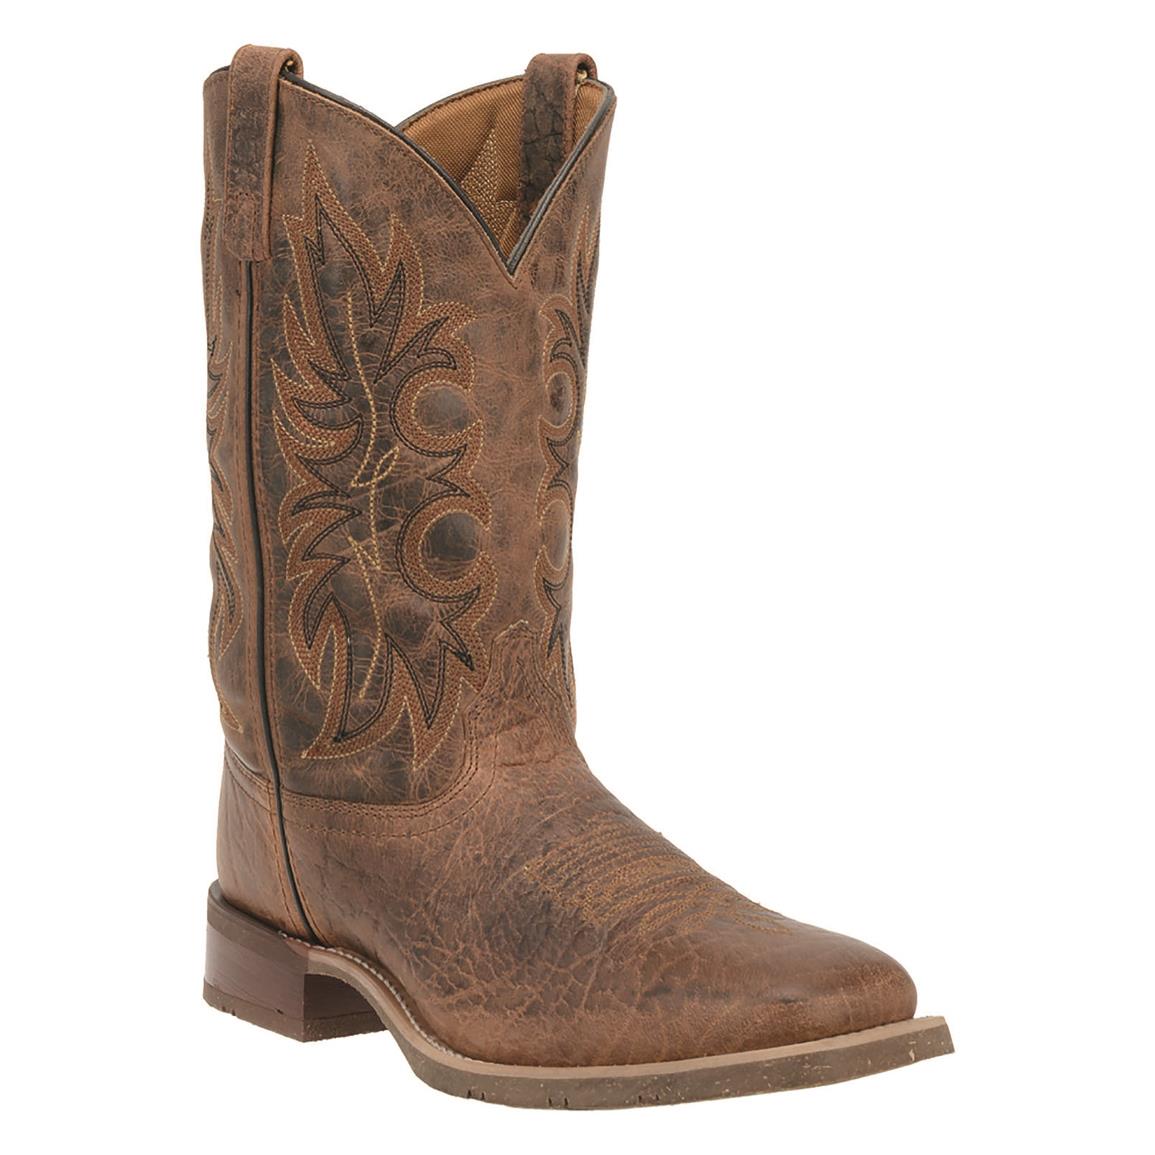 Laredo Men's Durant Leather Western Boots, Rust